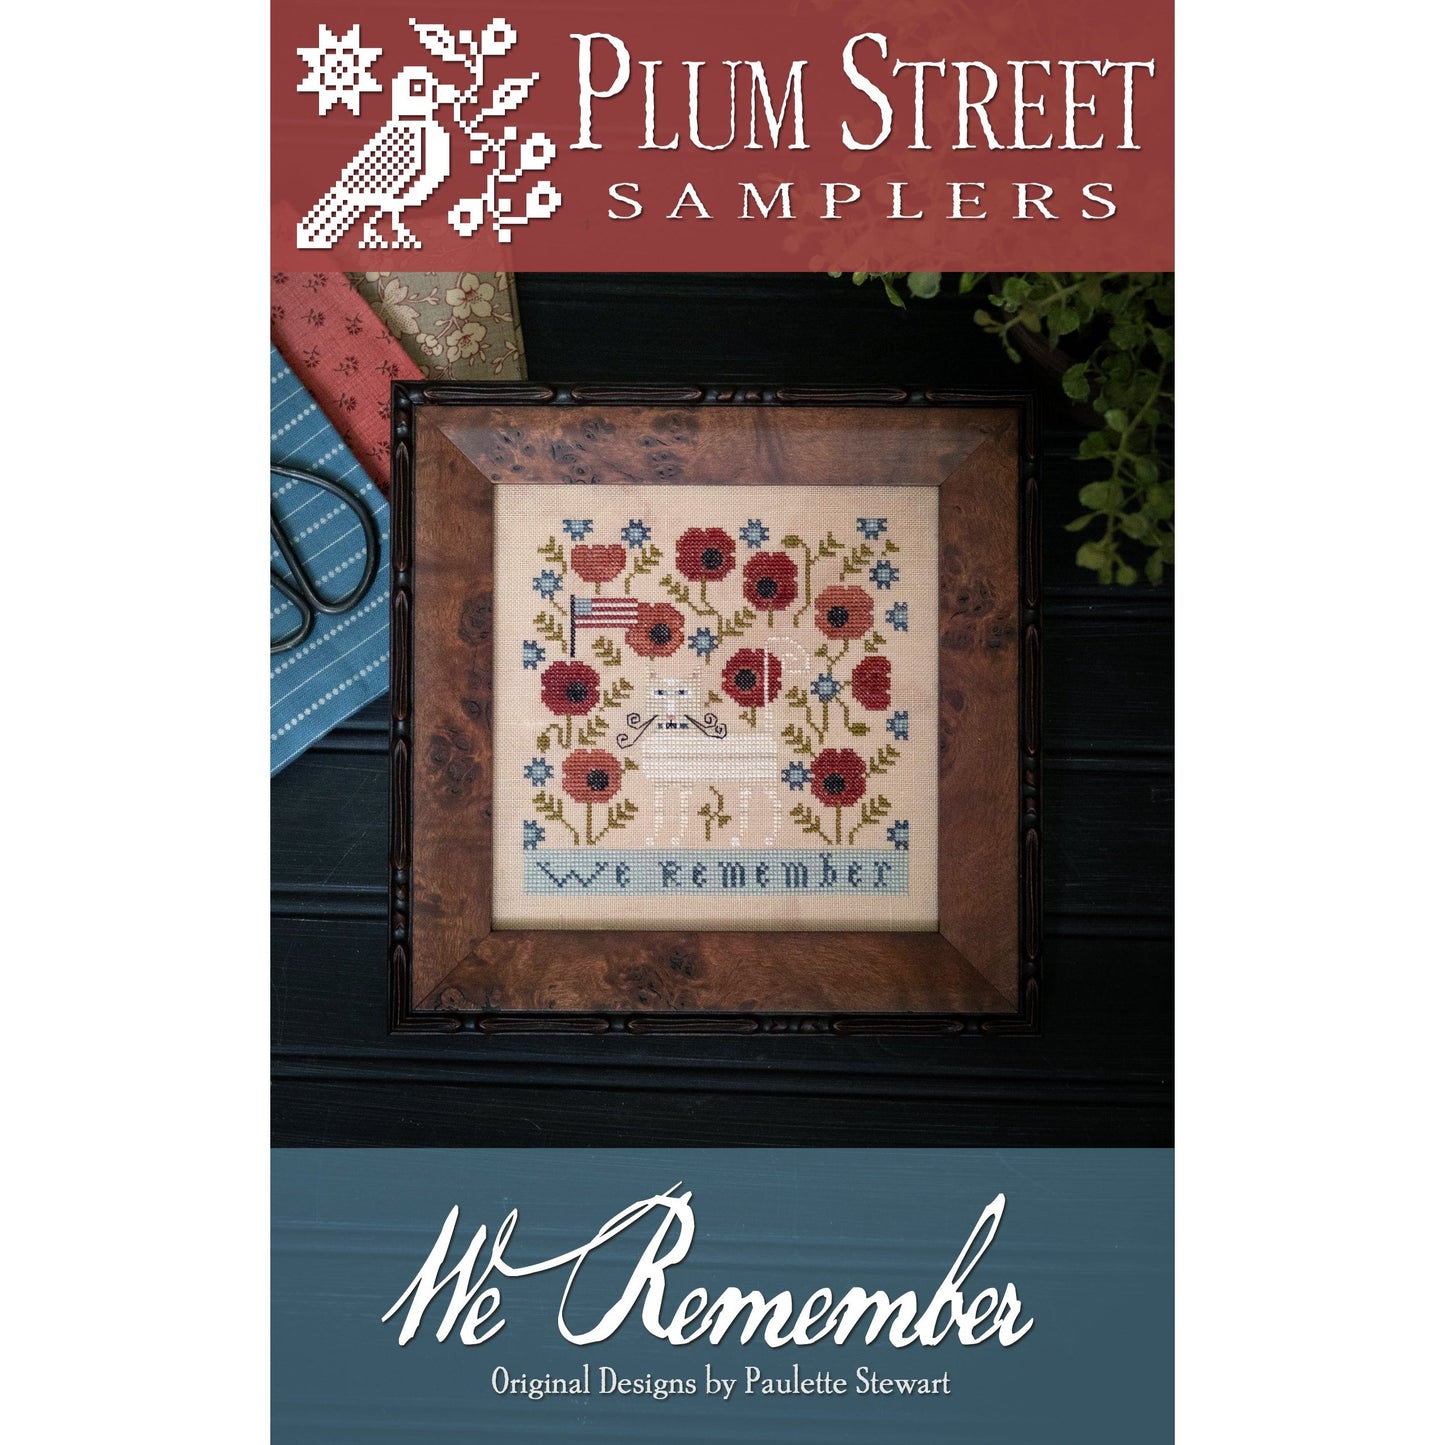 Plum Street Samplers | We Remember COMING SOON!